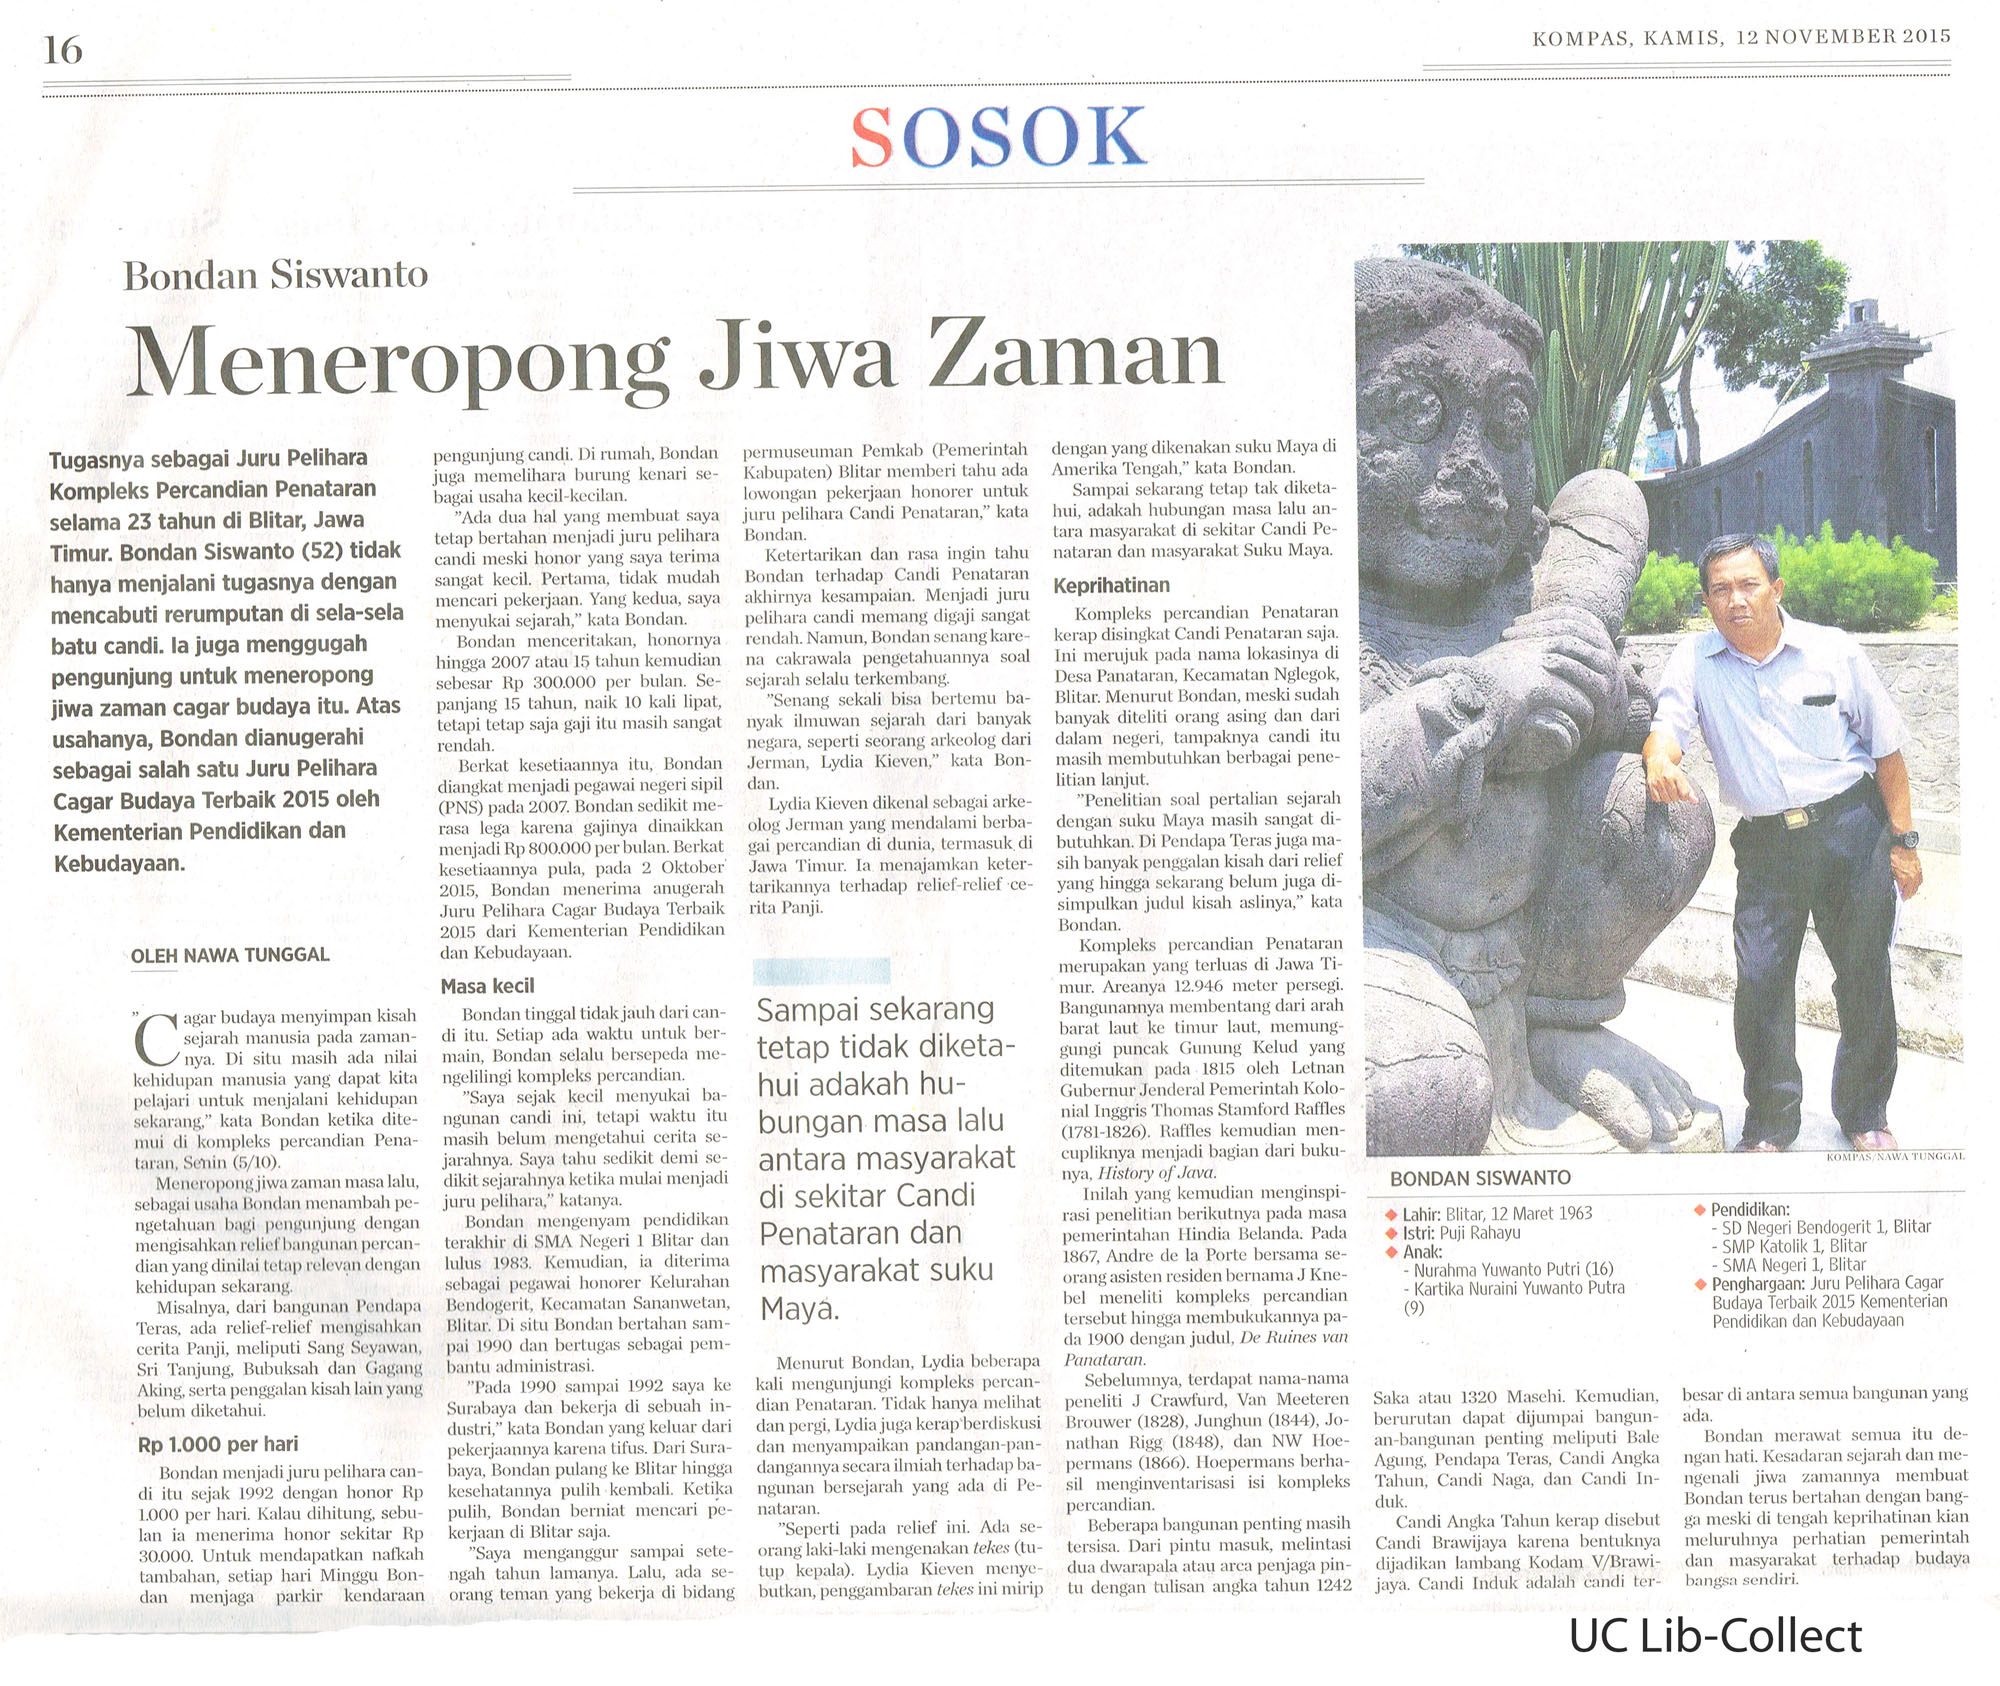 Meneropong Jiwa Zaman. Kompas.12 November 2015. Hal.16